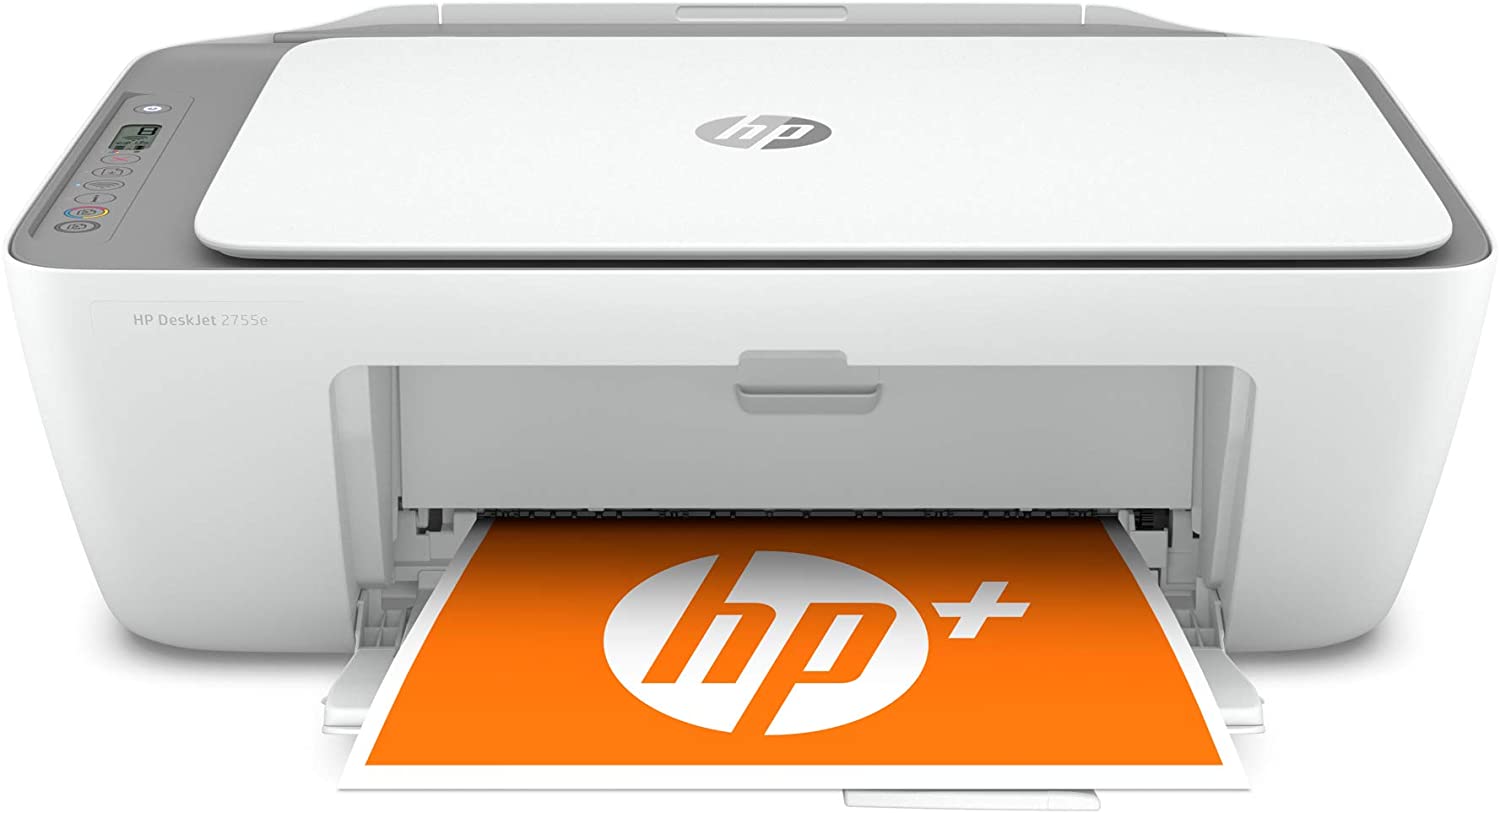 hp 2100 printer driver for mac